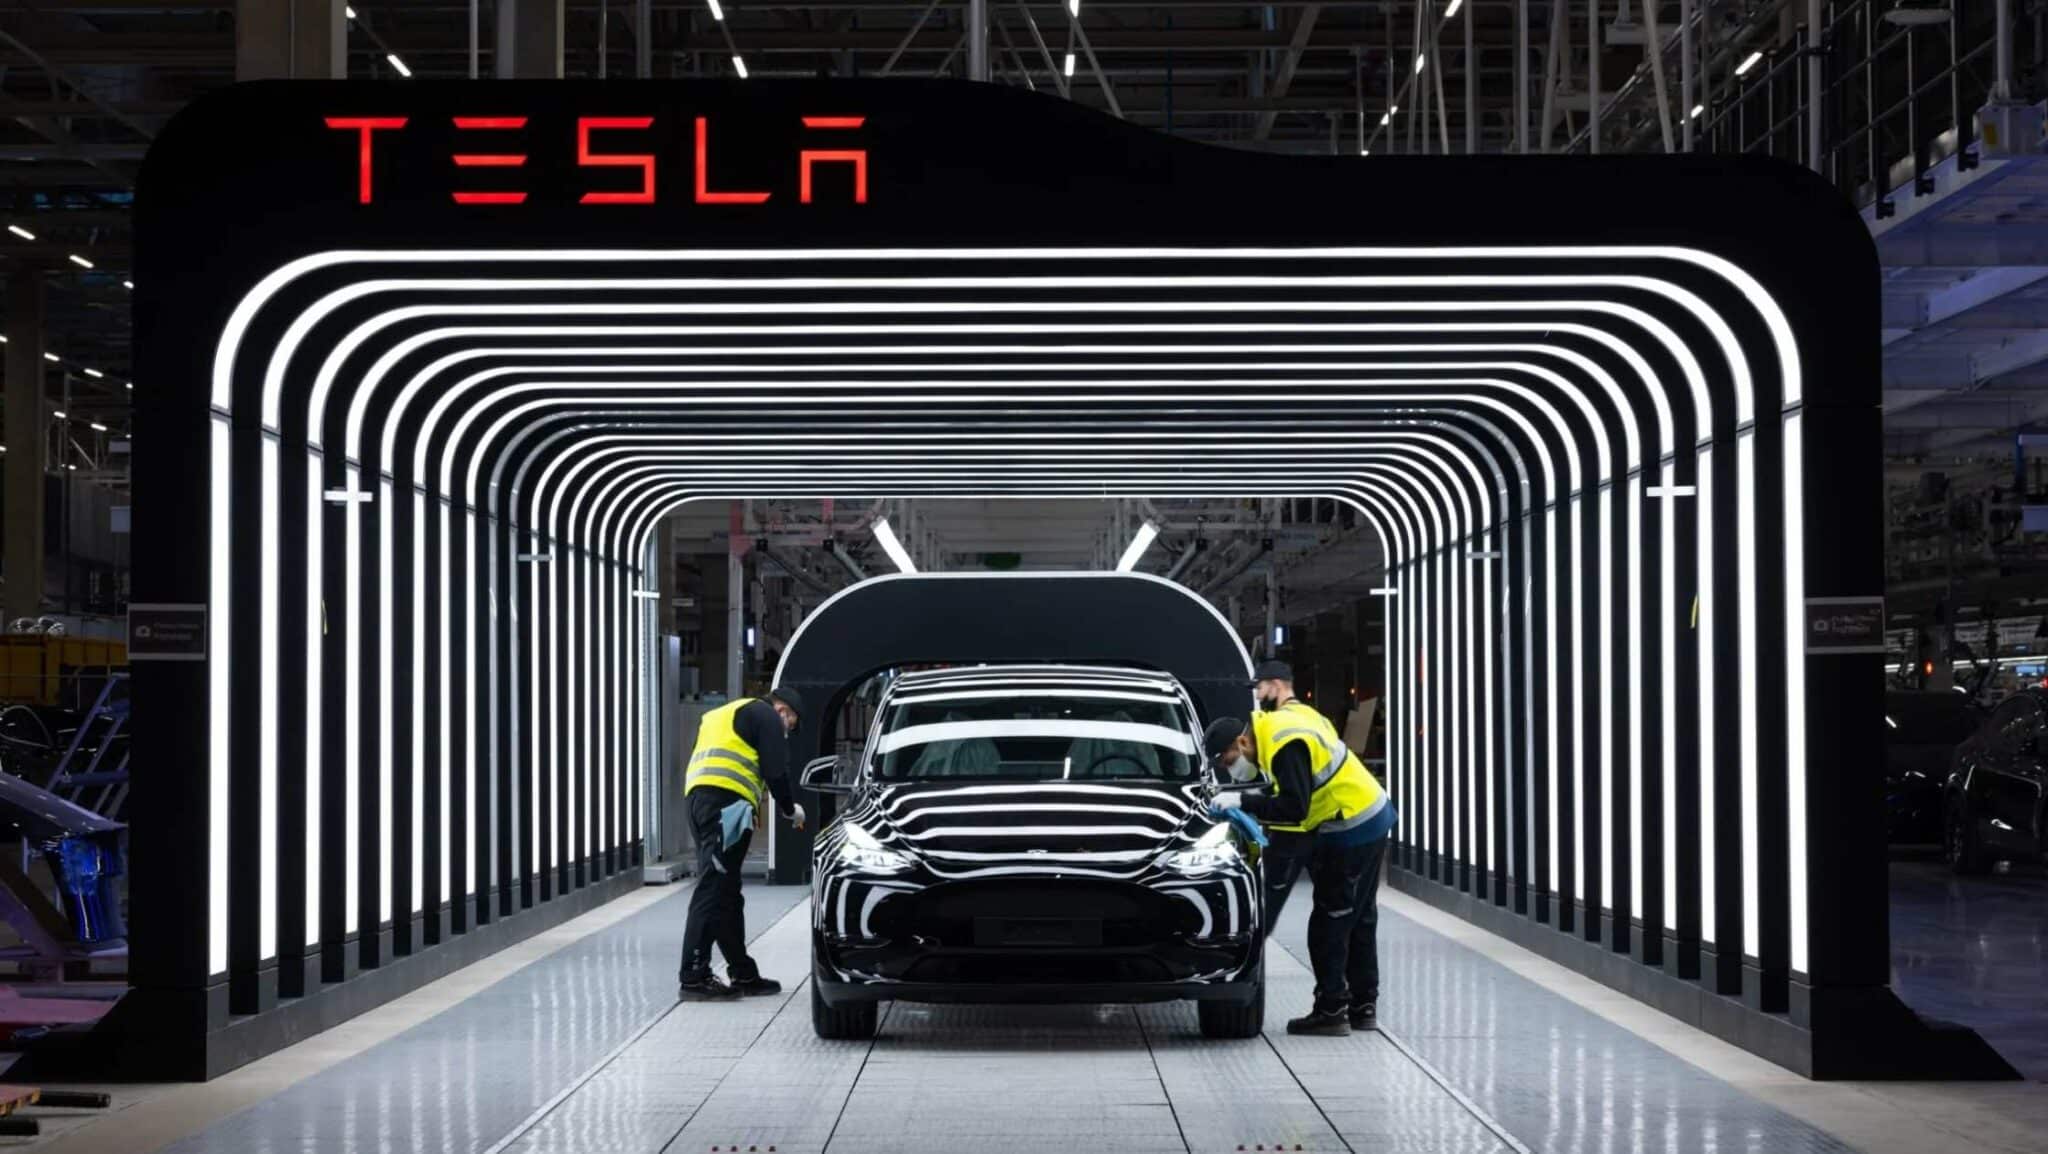 Tesla remporte une bataille judiciaire symbolique